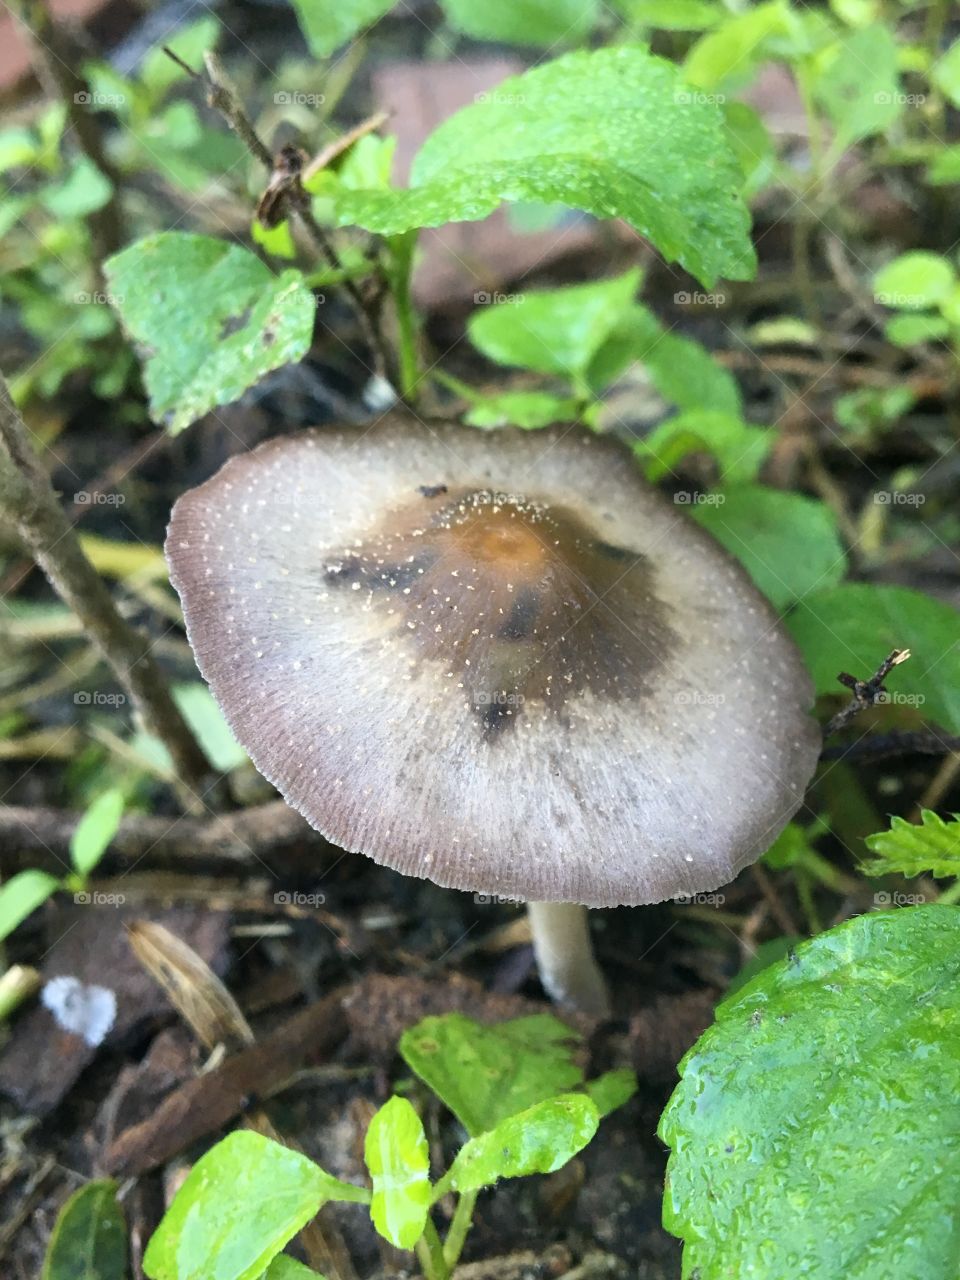 A closeup of a mushroom amidst green leaves after a recent rainfall.